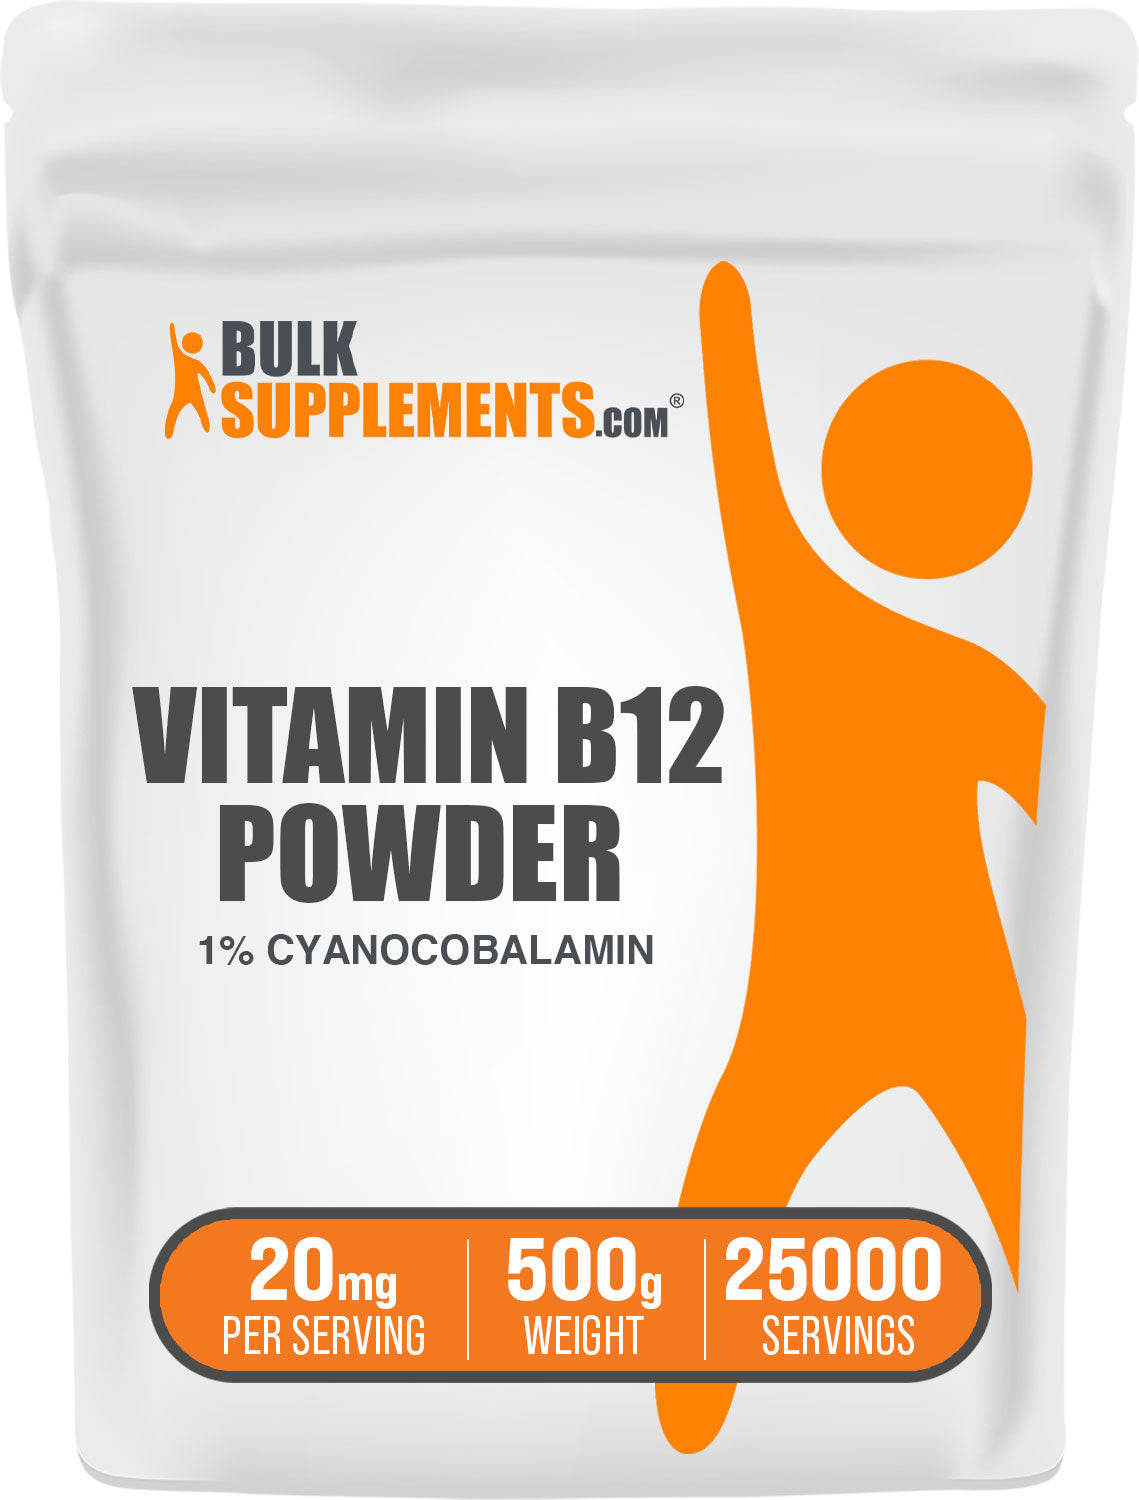 BulkSupplements Vitamin B12 Powder 1% Cyanocobalamin 500g bag